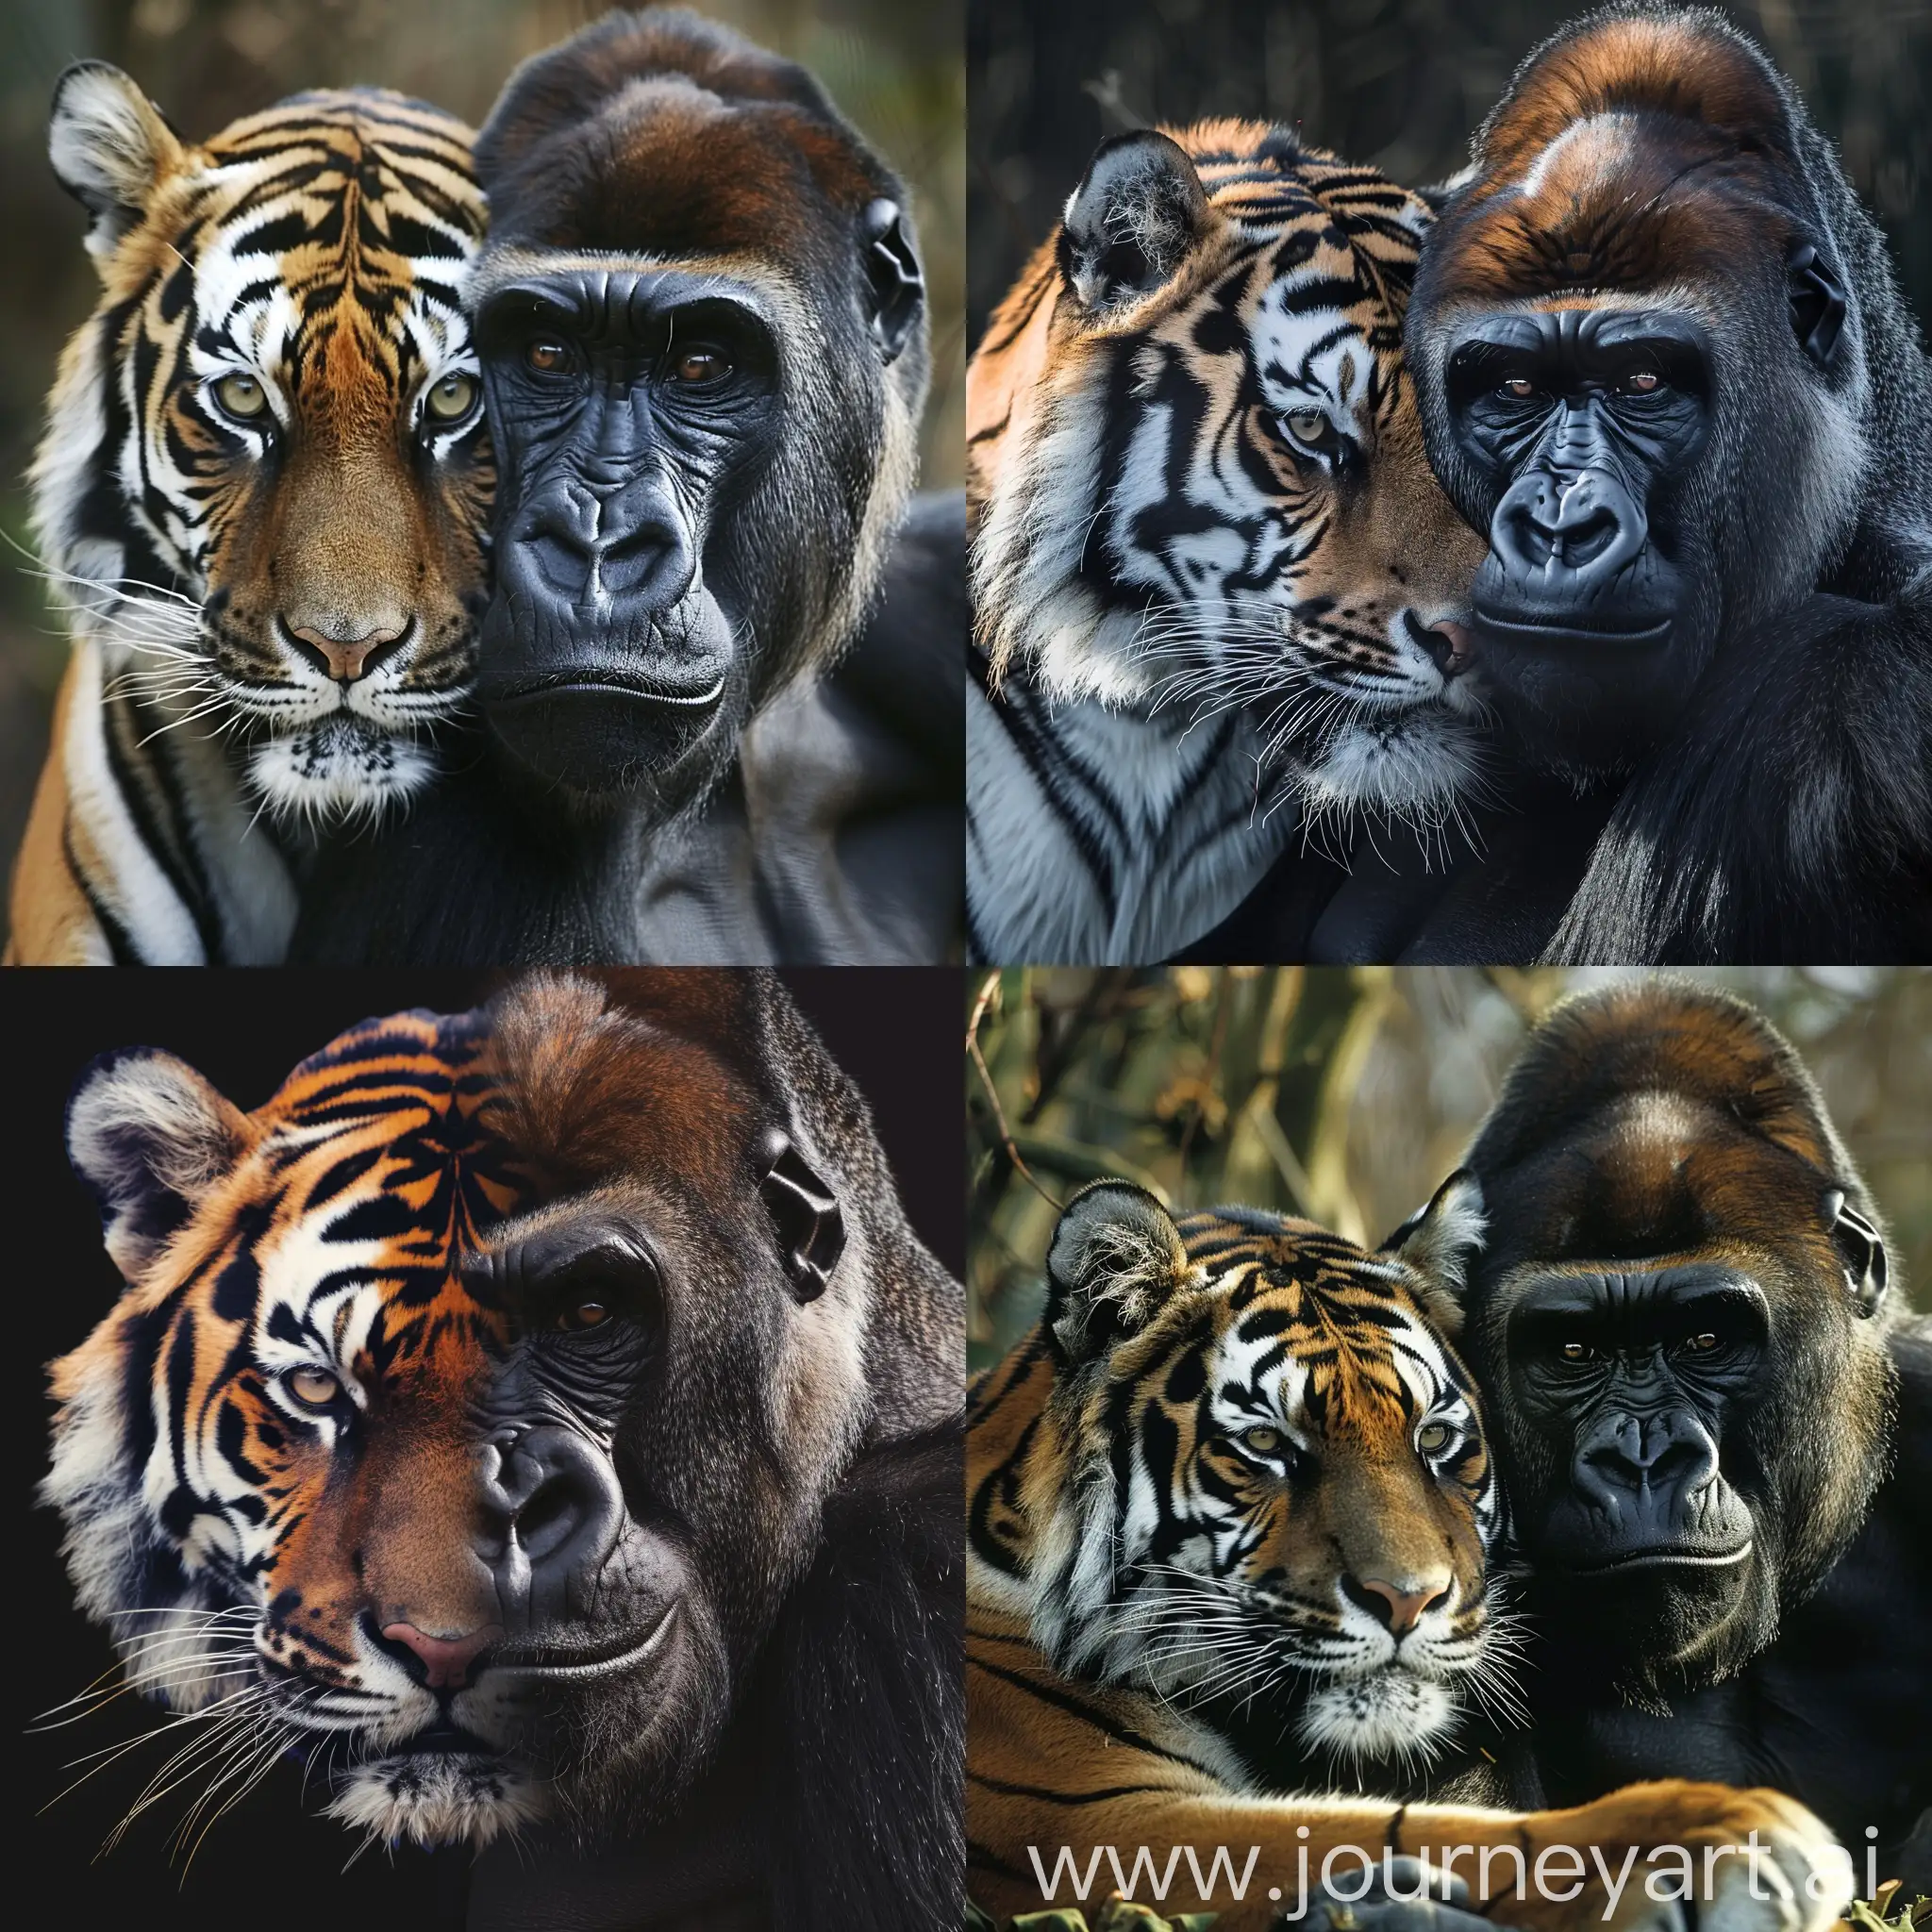 Tiger-Gorilla-Hybrid-Majestic-Beast-with-Ferocious-Strength